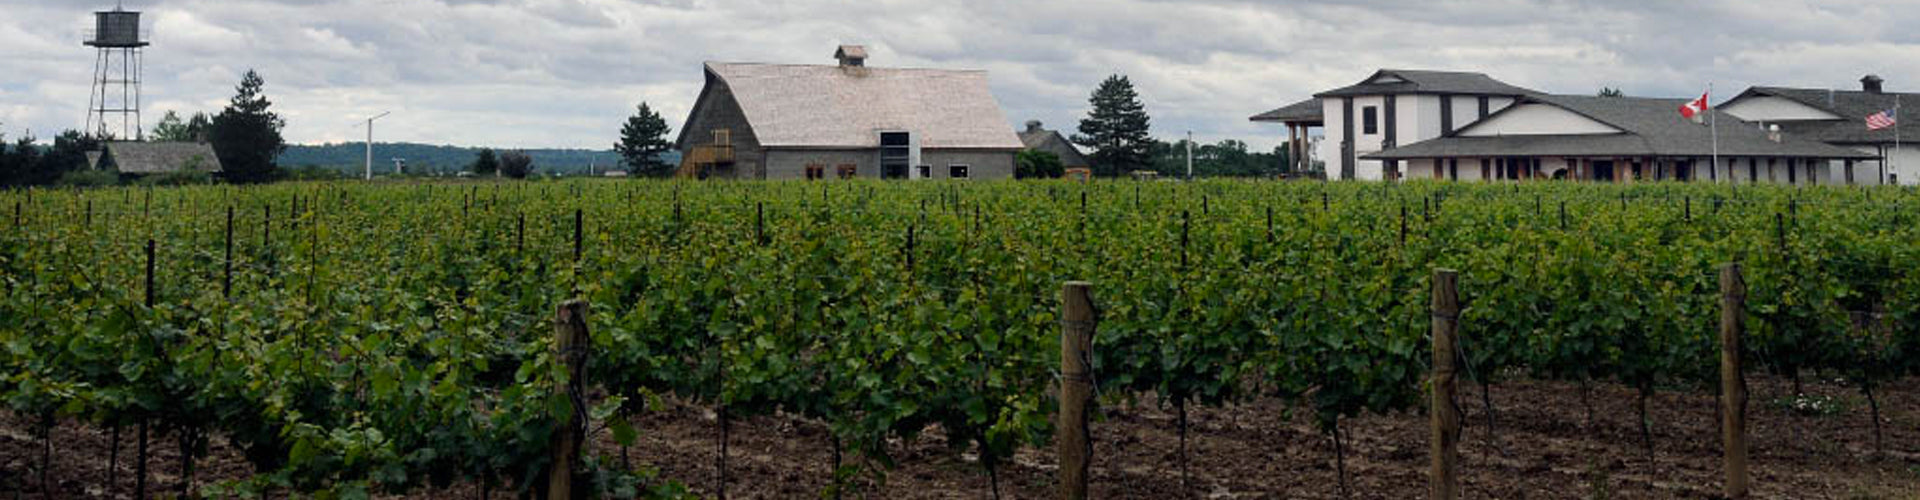 Inniskillin Winery & Vines in Niagra, Canada